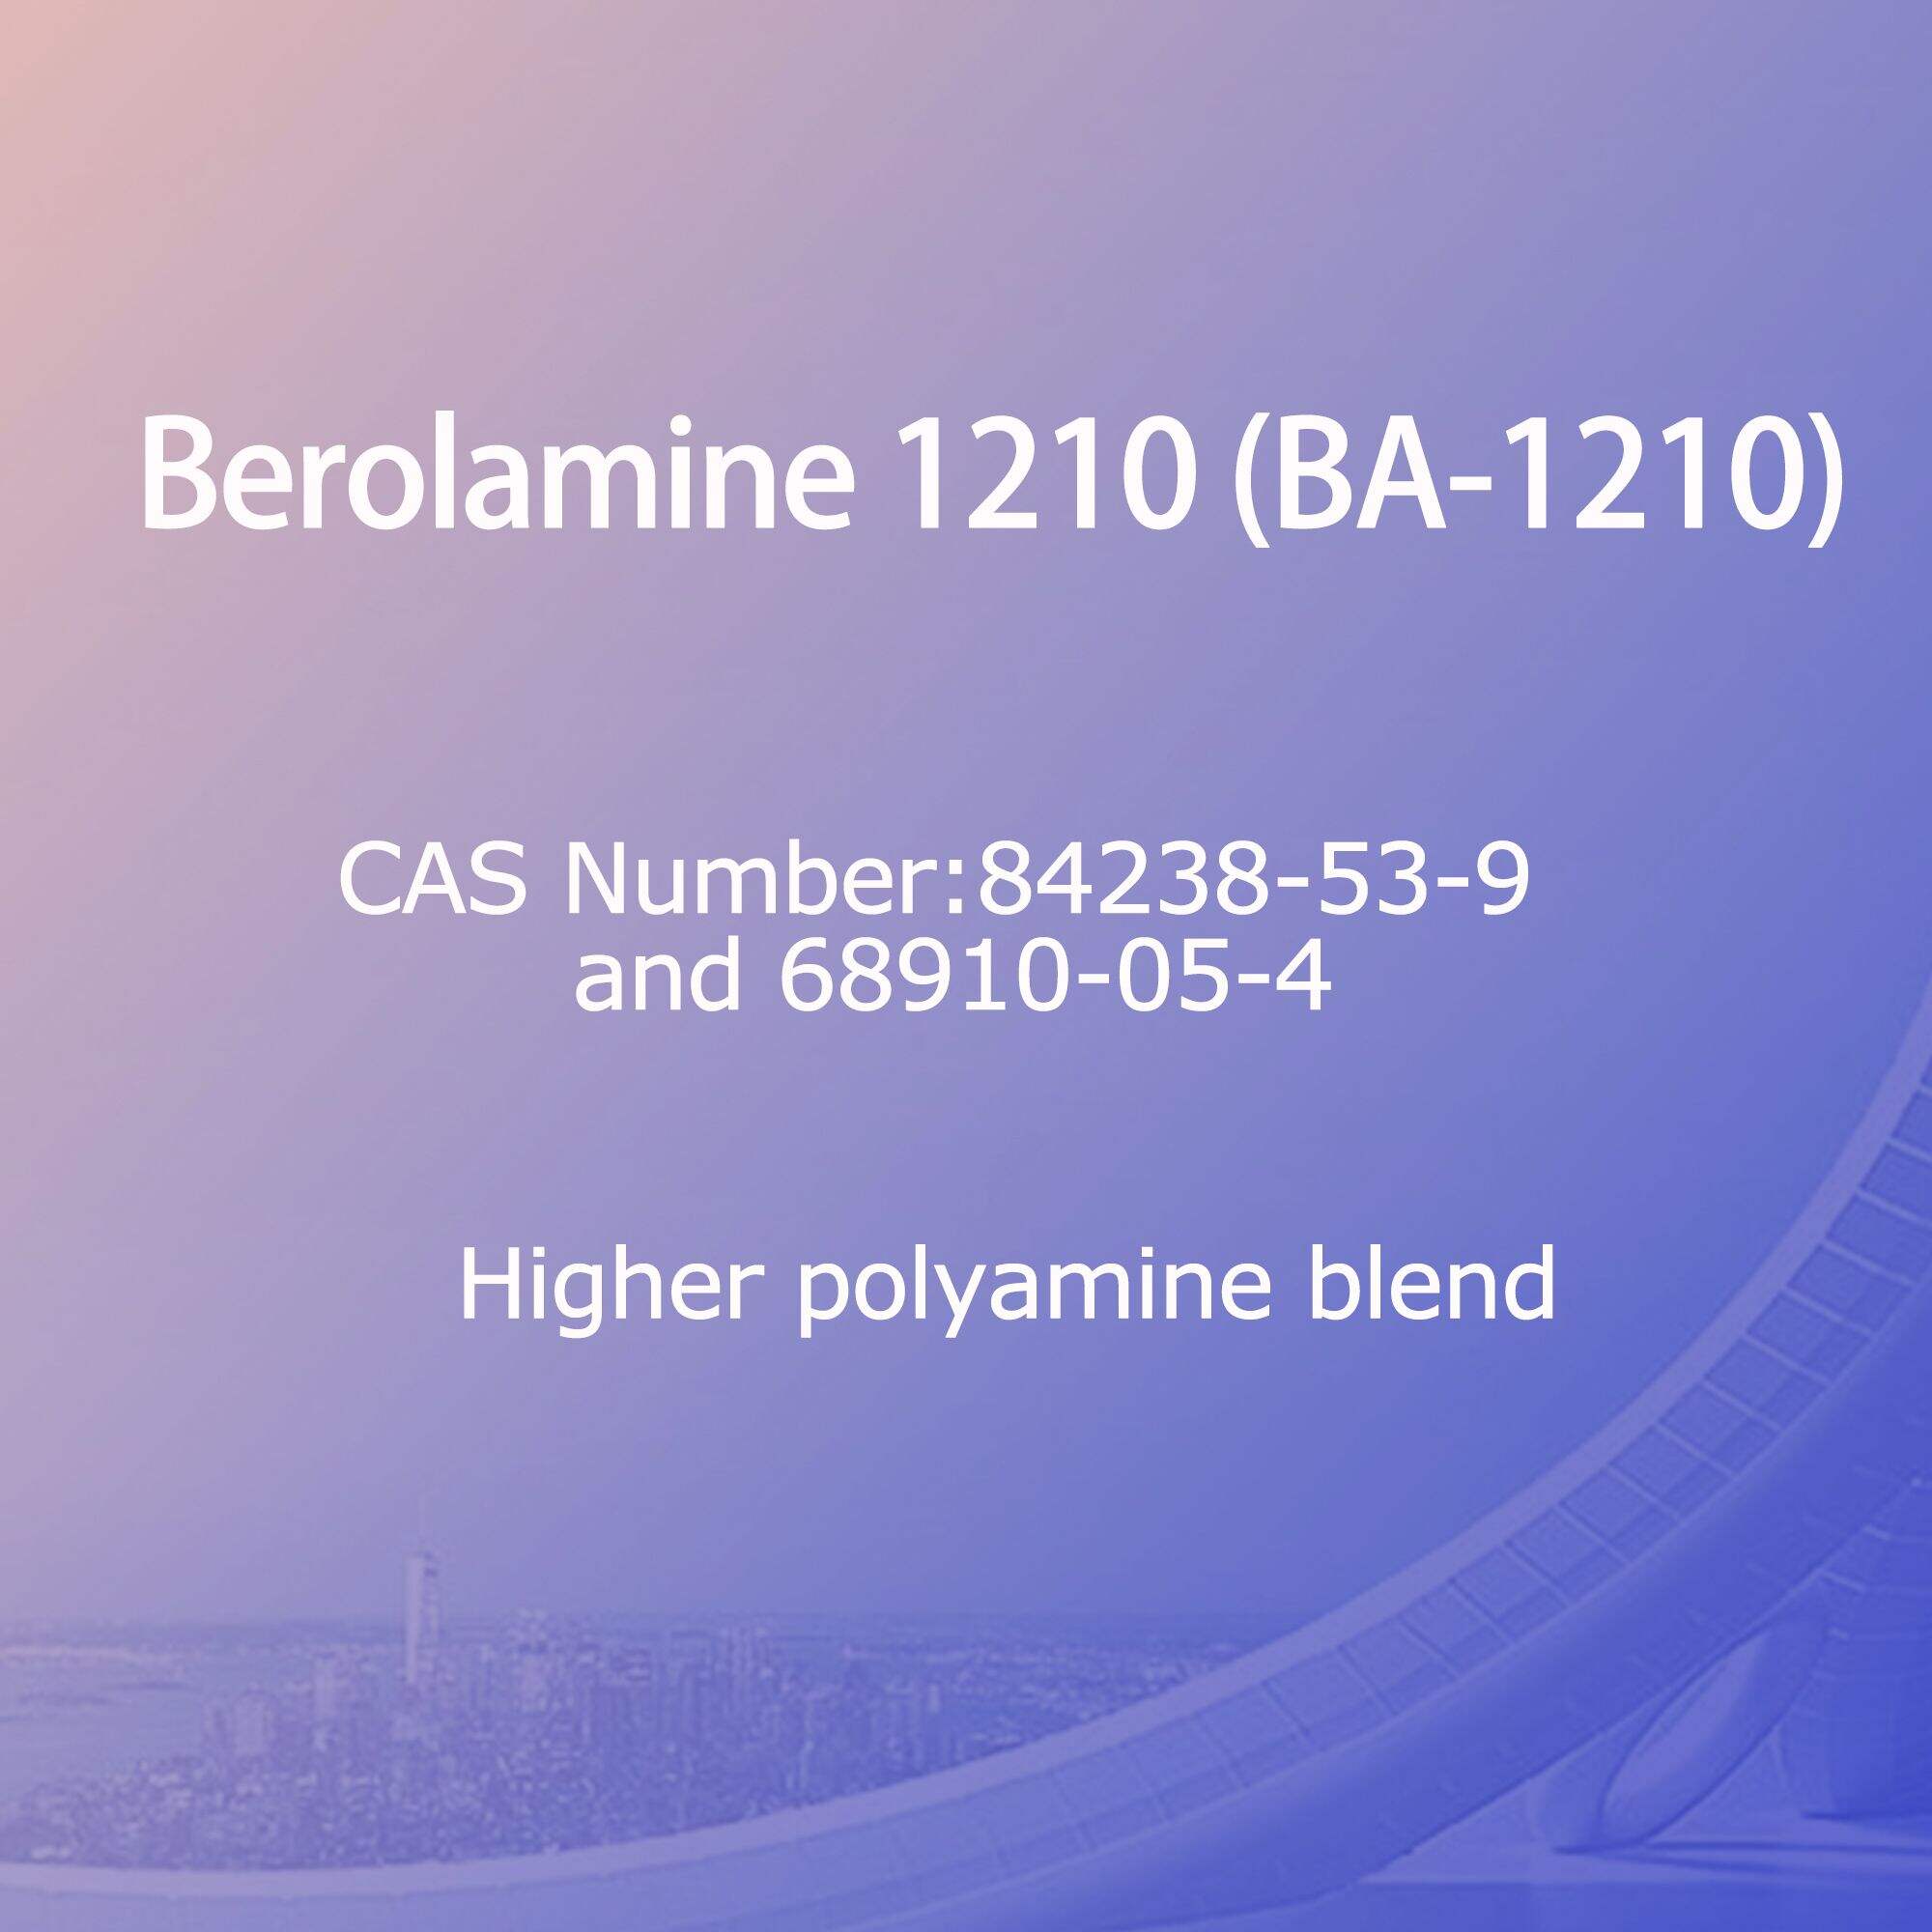 Berolamine 1210 (BA-1210),Higher polyamine blend